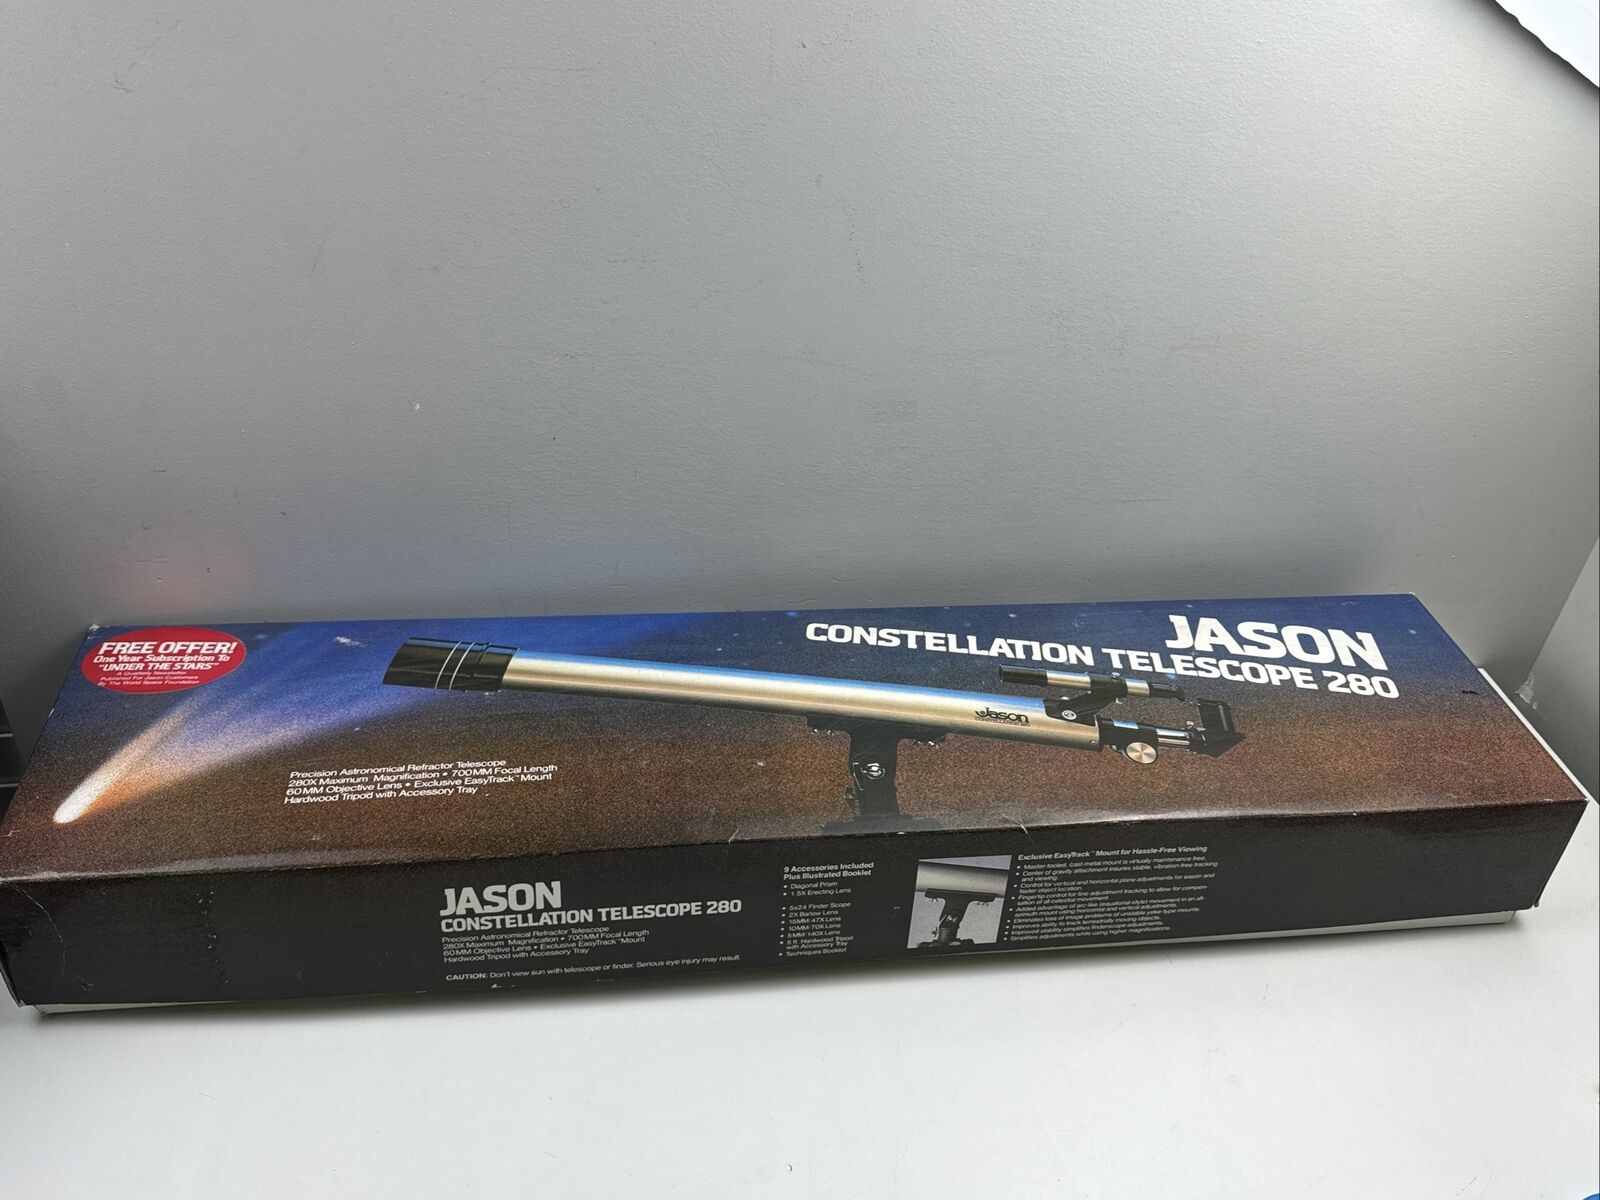 Jason 280 Constellation Telescope Model 311 Barlow Lens Made in Japan NEW in Box